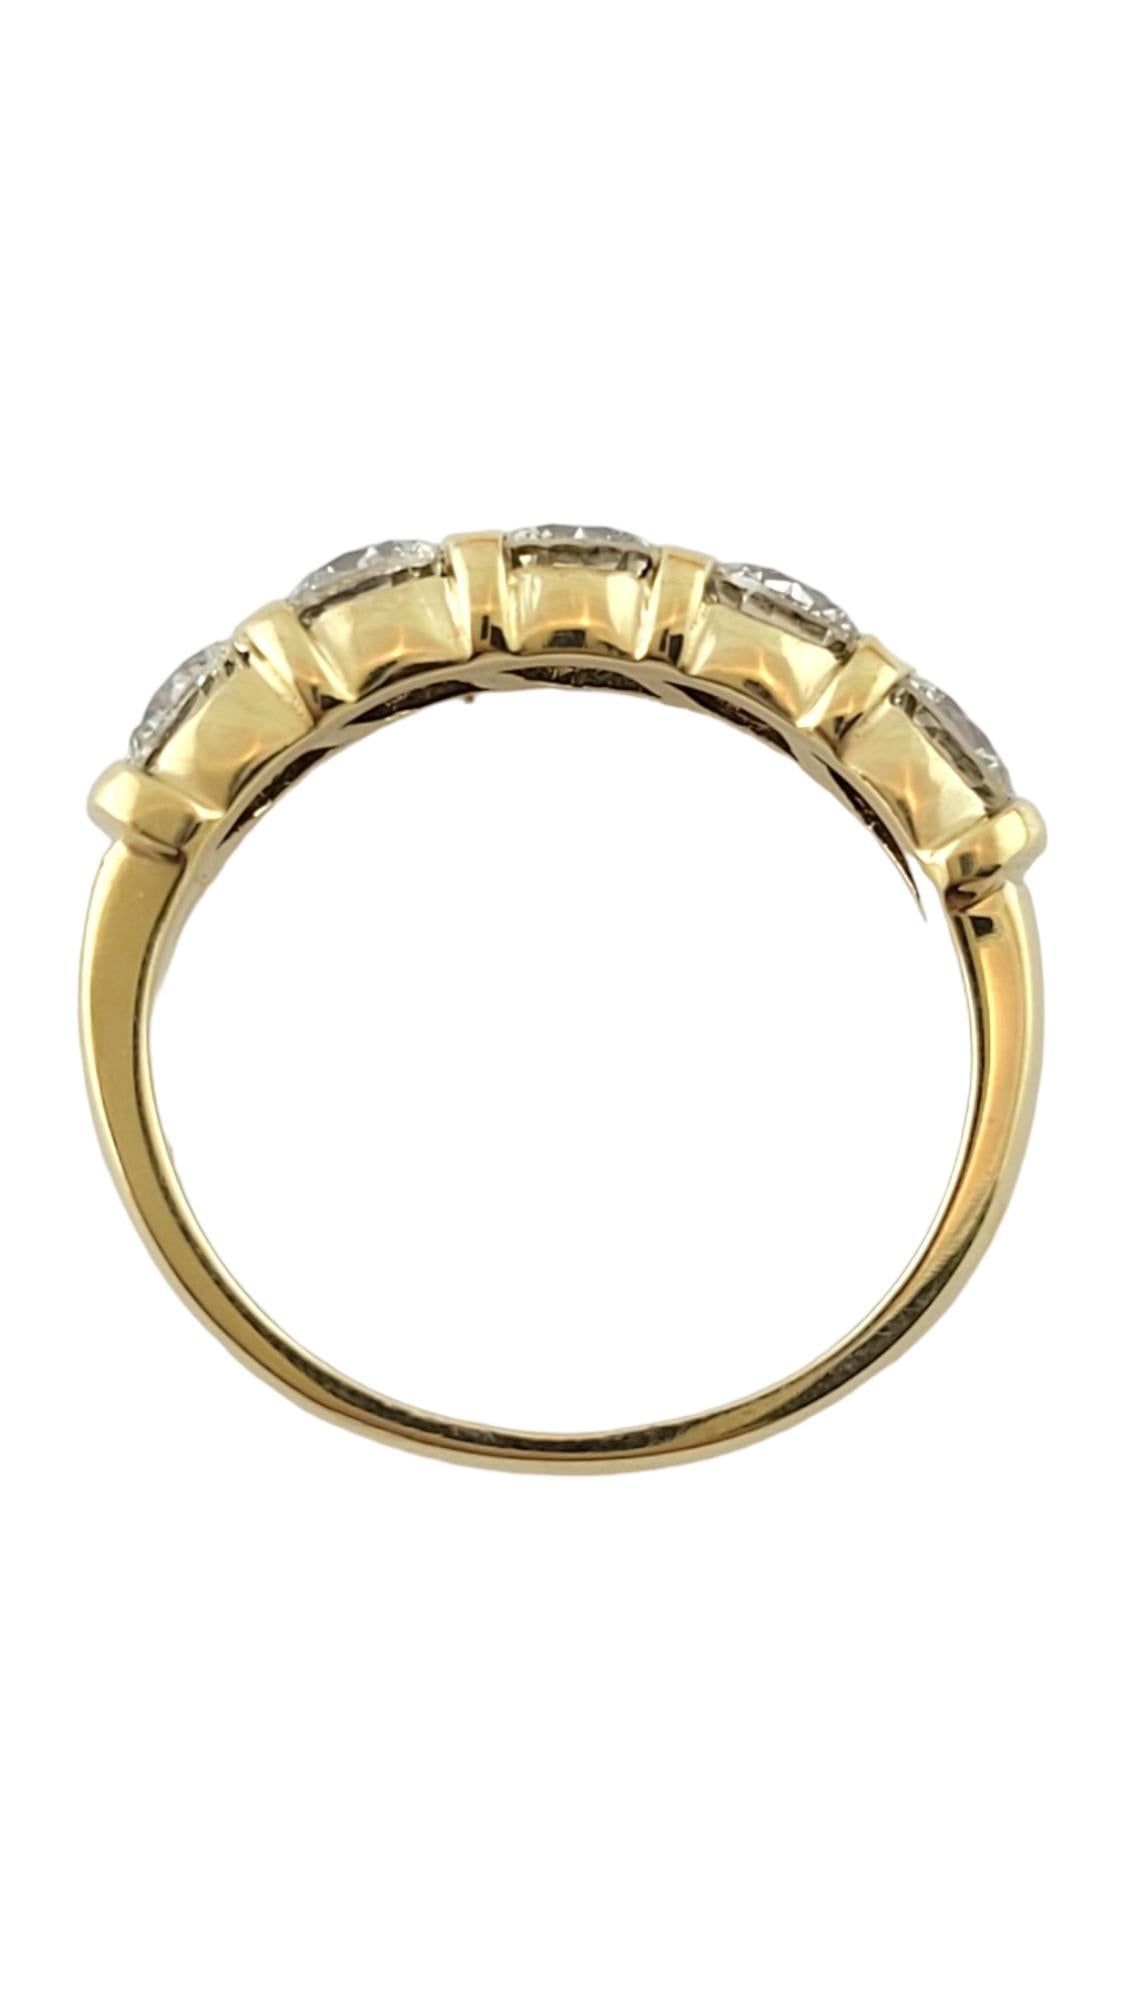 Brilliant Cut 18 Karat Yellow Gold Diamond Wedding Band Ring Size 7.25 #16982 For Sale